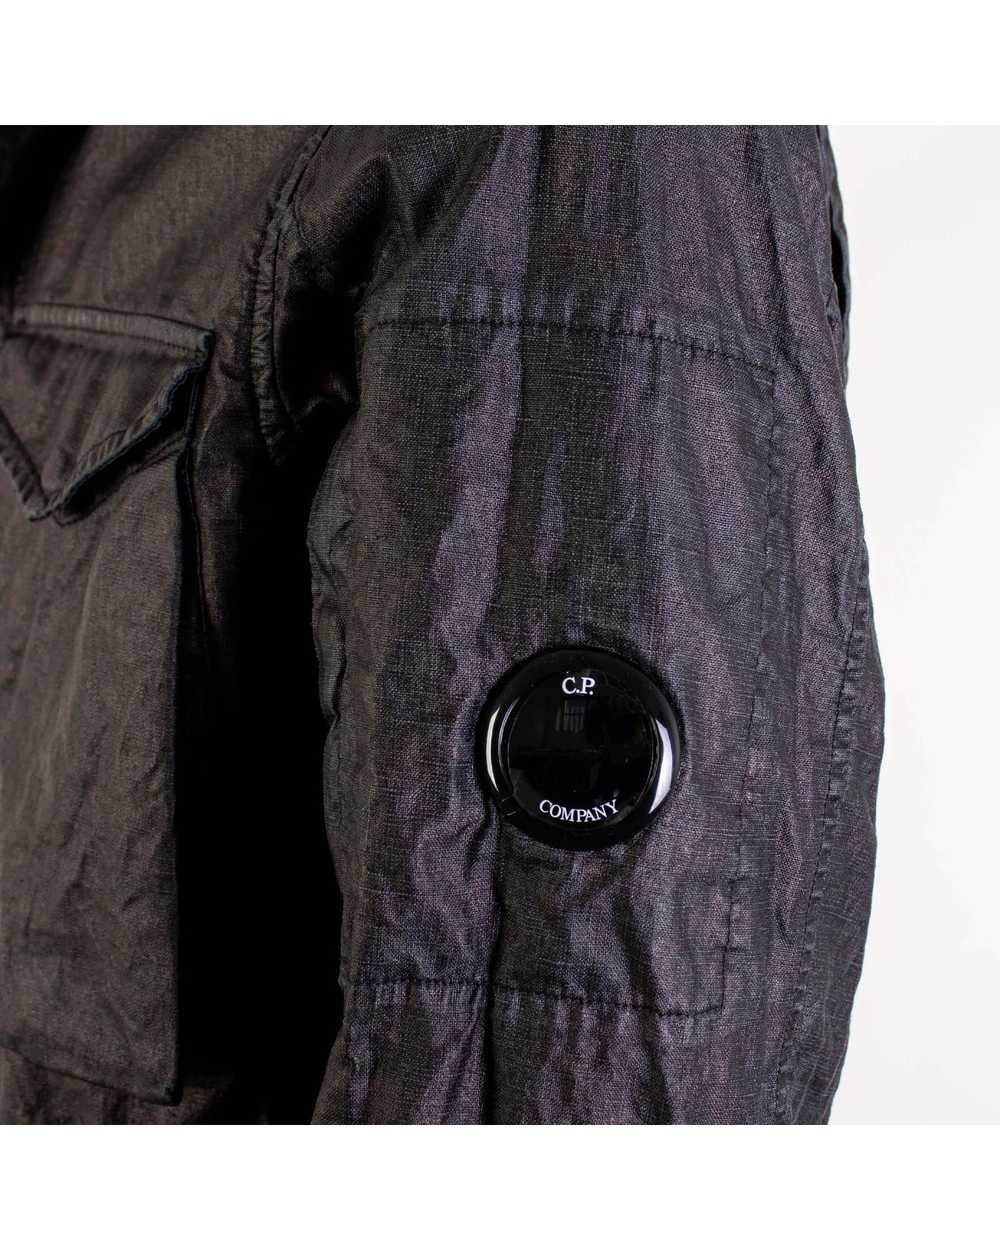 C.P. Company Wax Effect Overshirt Jacket - image 2